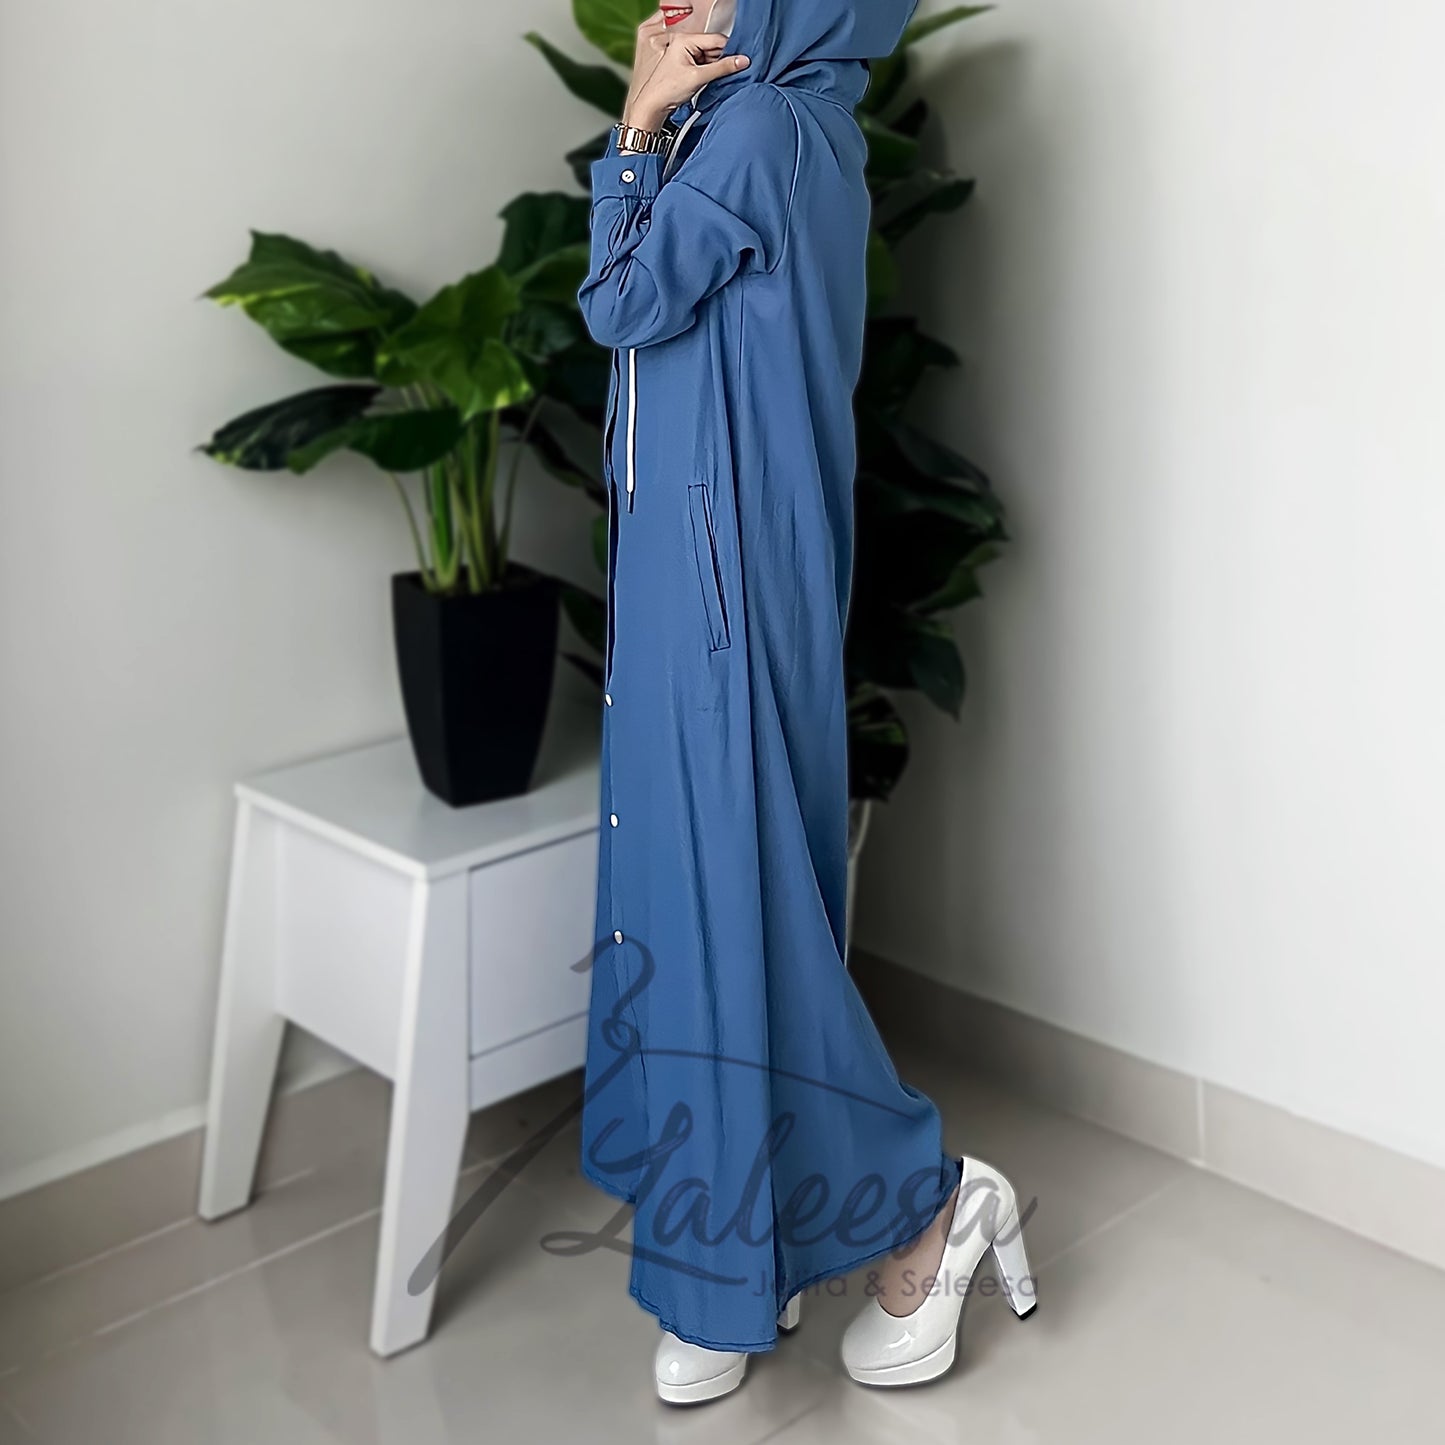 LALEESA LD255253 Jeans Hooded Hoodie Dress Long Dress Muslimah Dress Women Dress Maxi Dress Abaya Muslimah Baju Muslimah